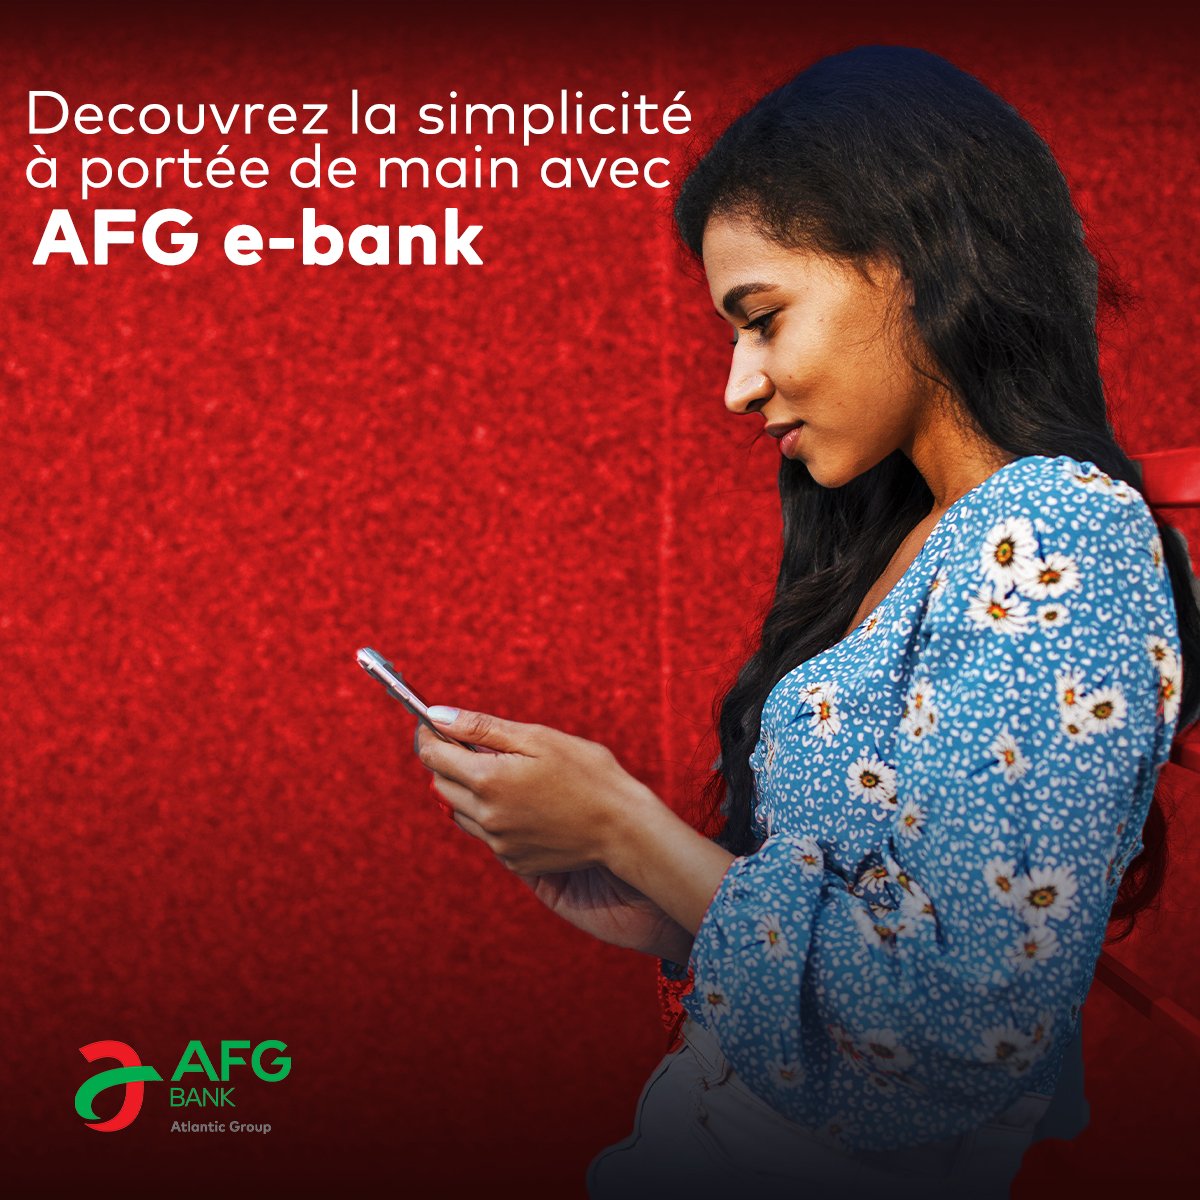 AFG e-bank